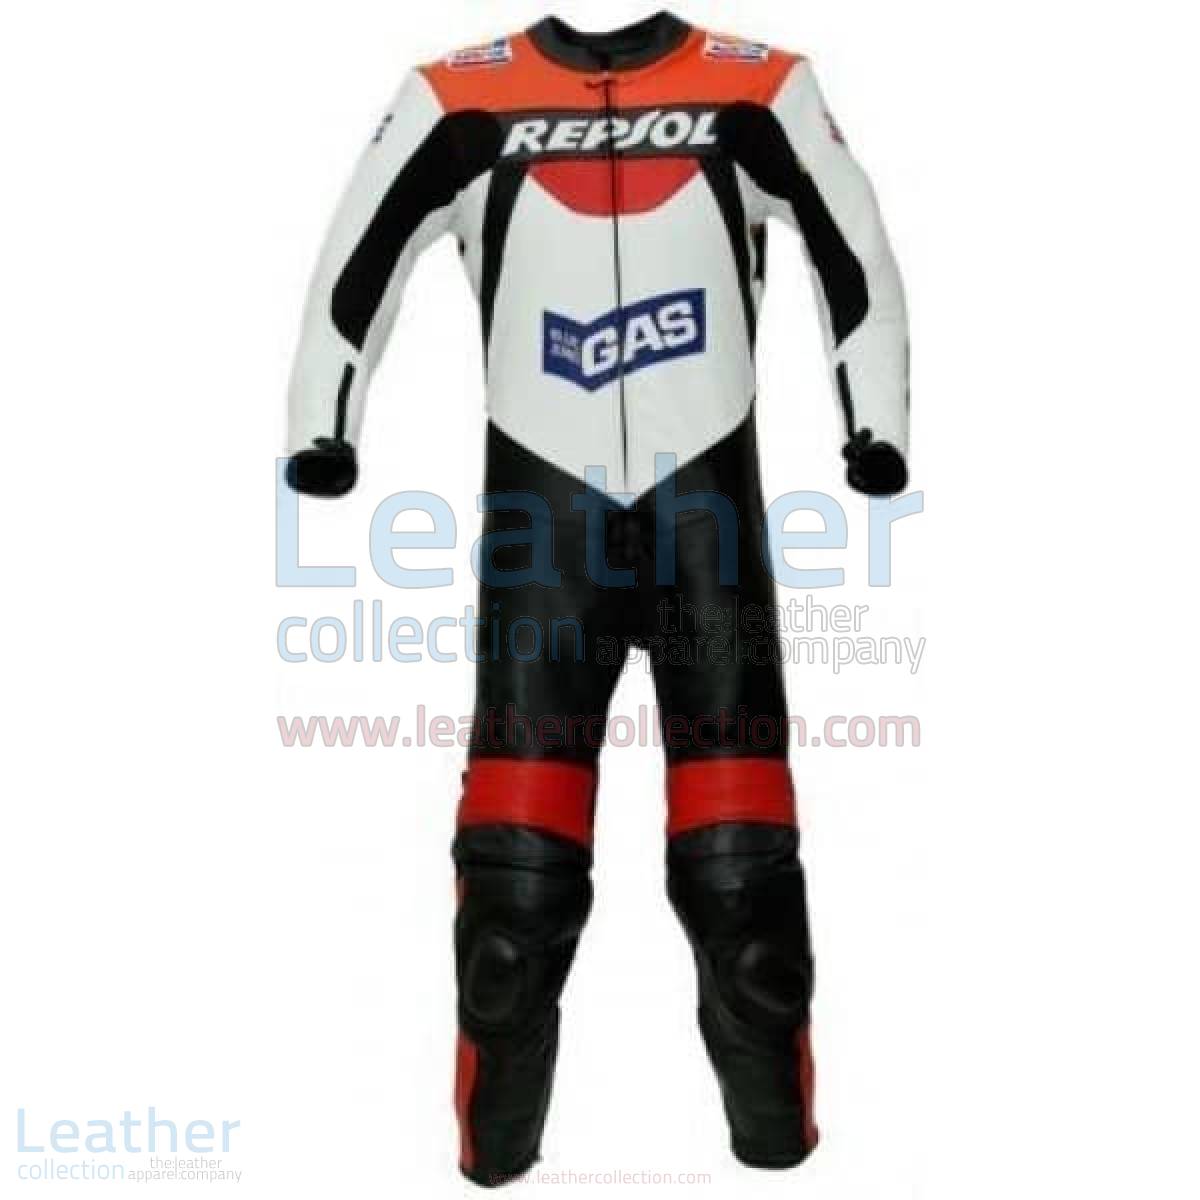 Repsol Gas Racing Leather Suit –  Suit